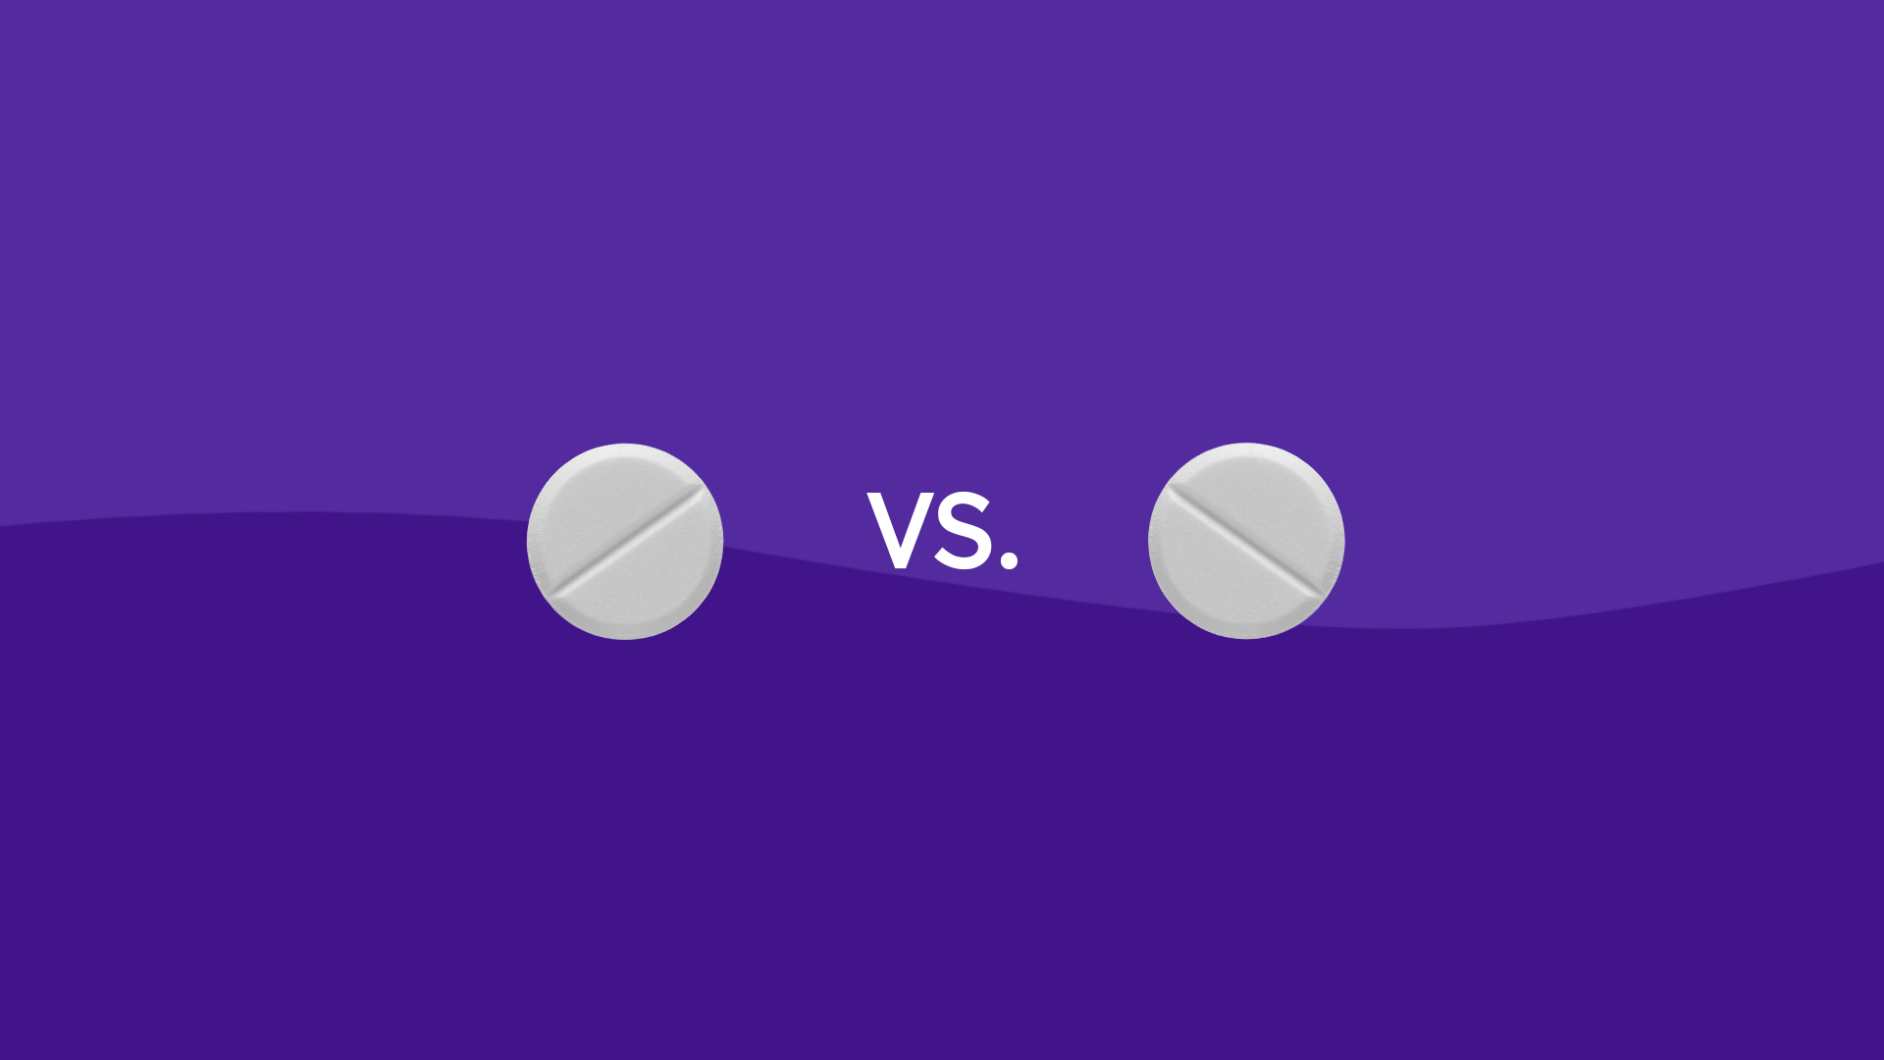 Robaxin vs. Flexeril drug comparison